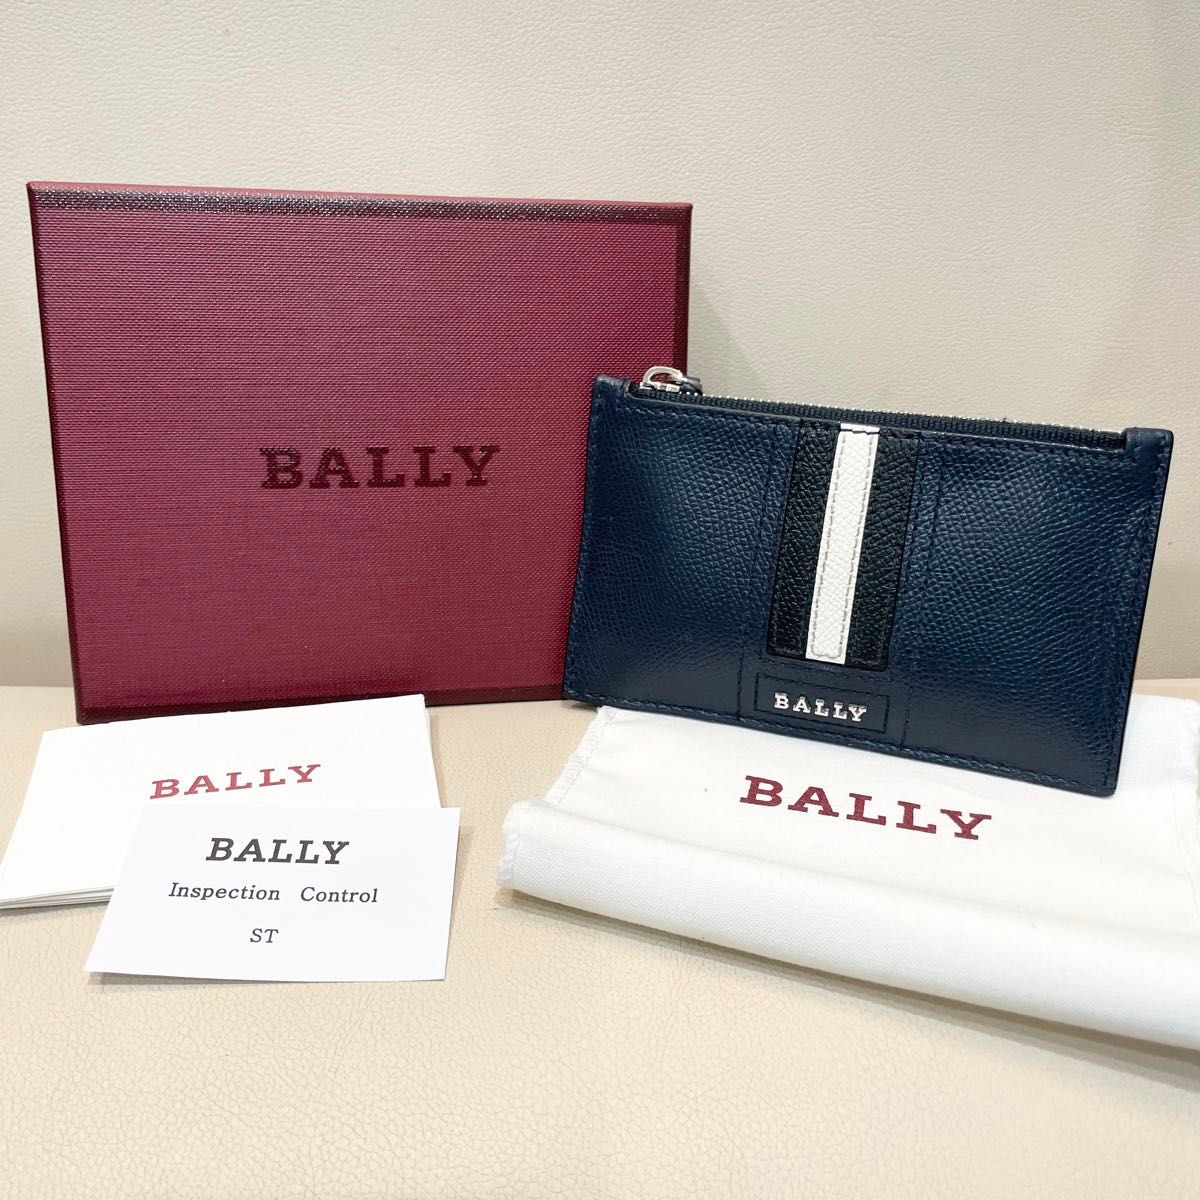 【BALLY】 コインケース 小銭入れ カードケース 財布 レザー バリー 美品 中古 箱あり メンズ レディース